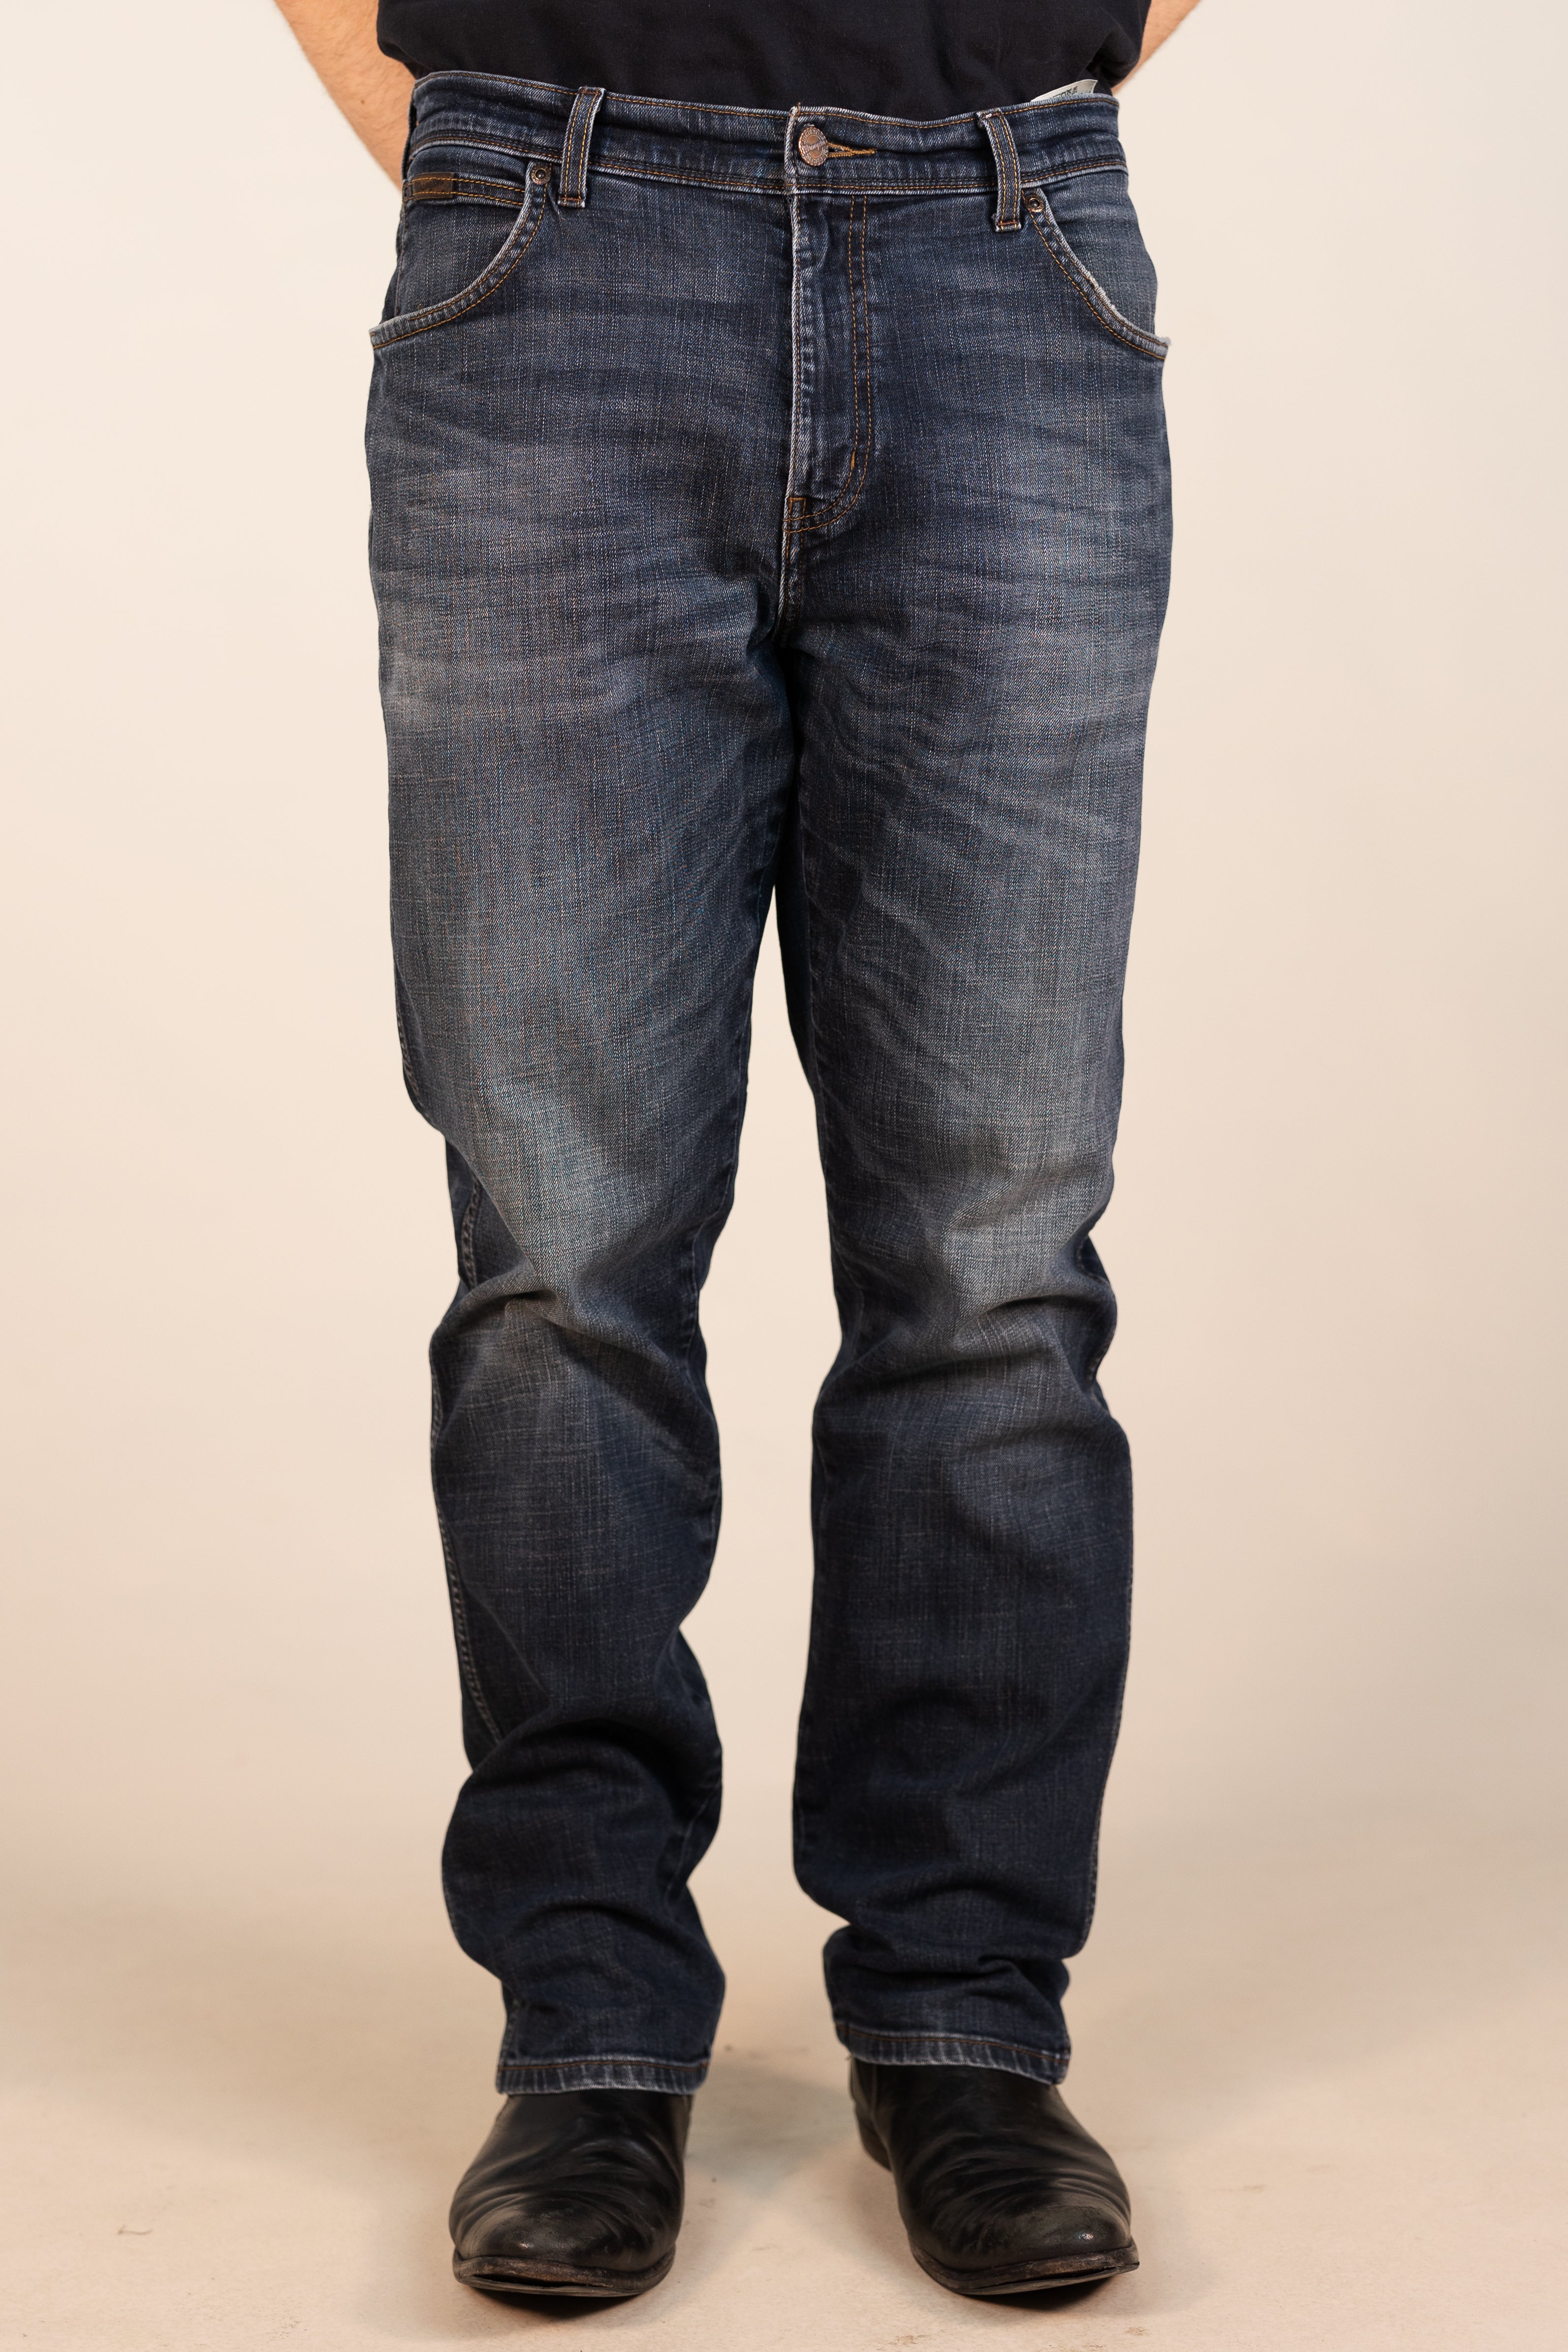 Wrangler 'Texas' Fit Jeans